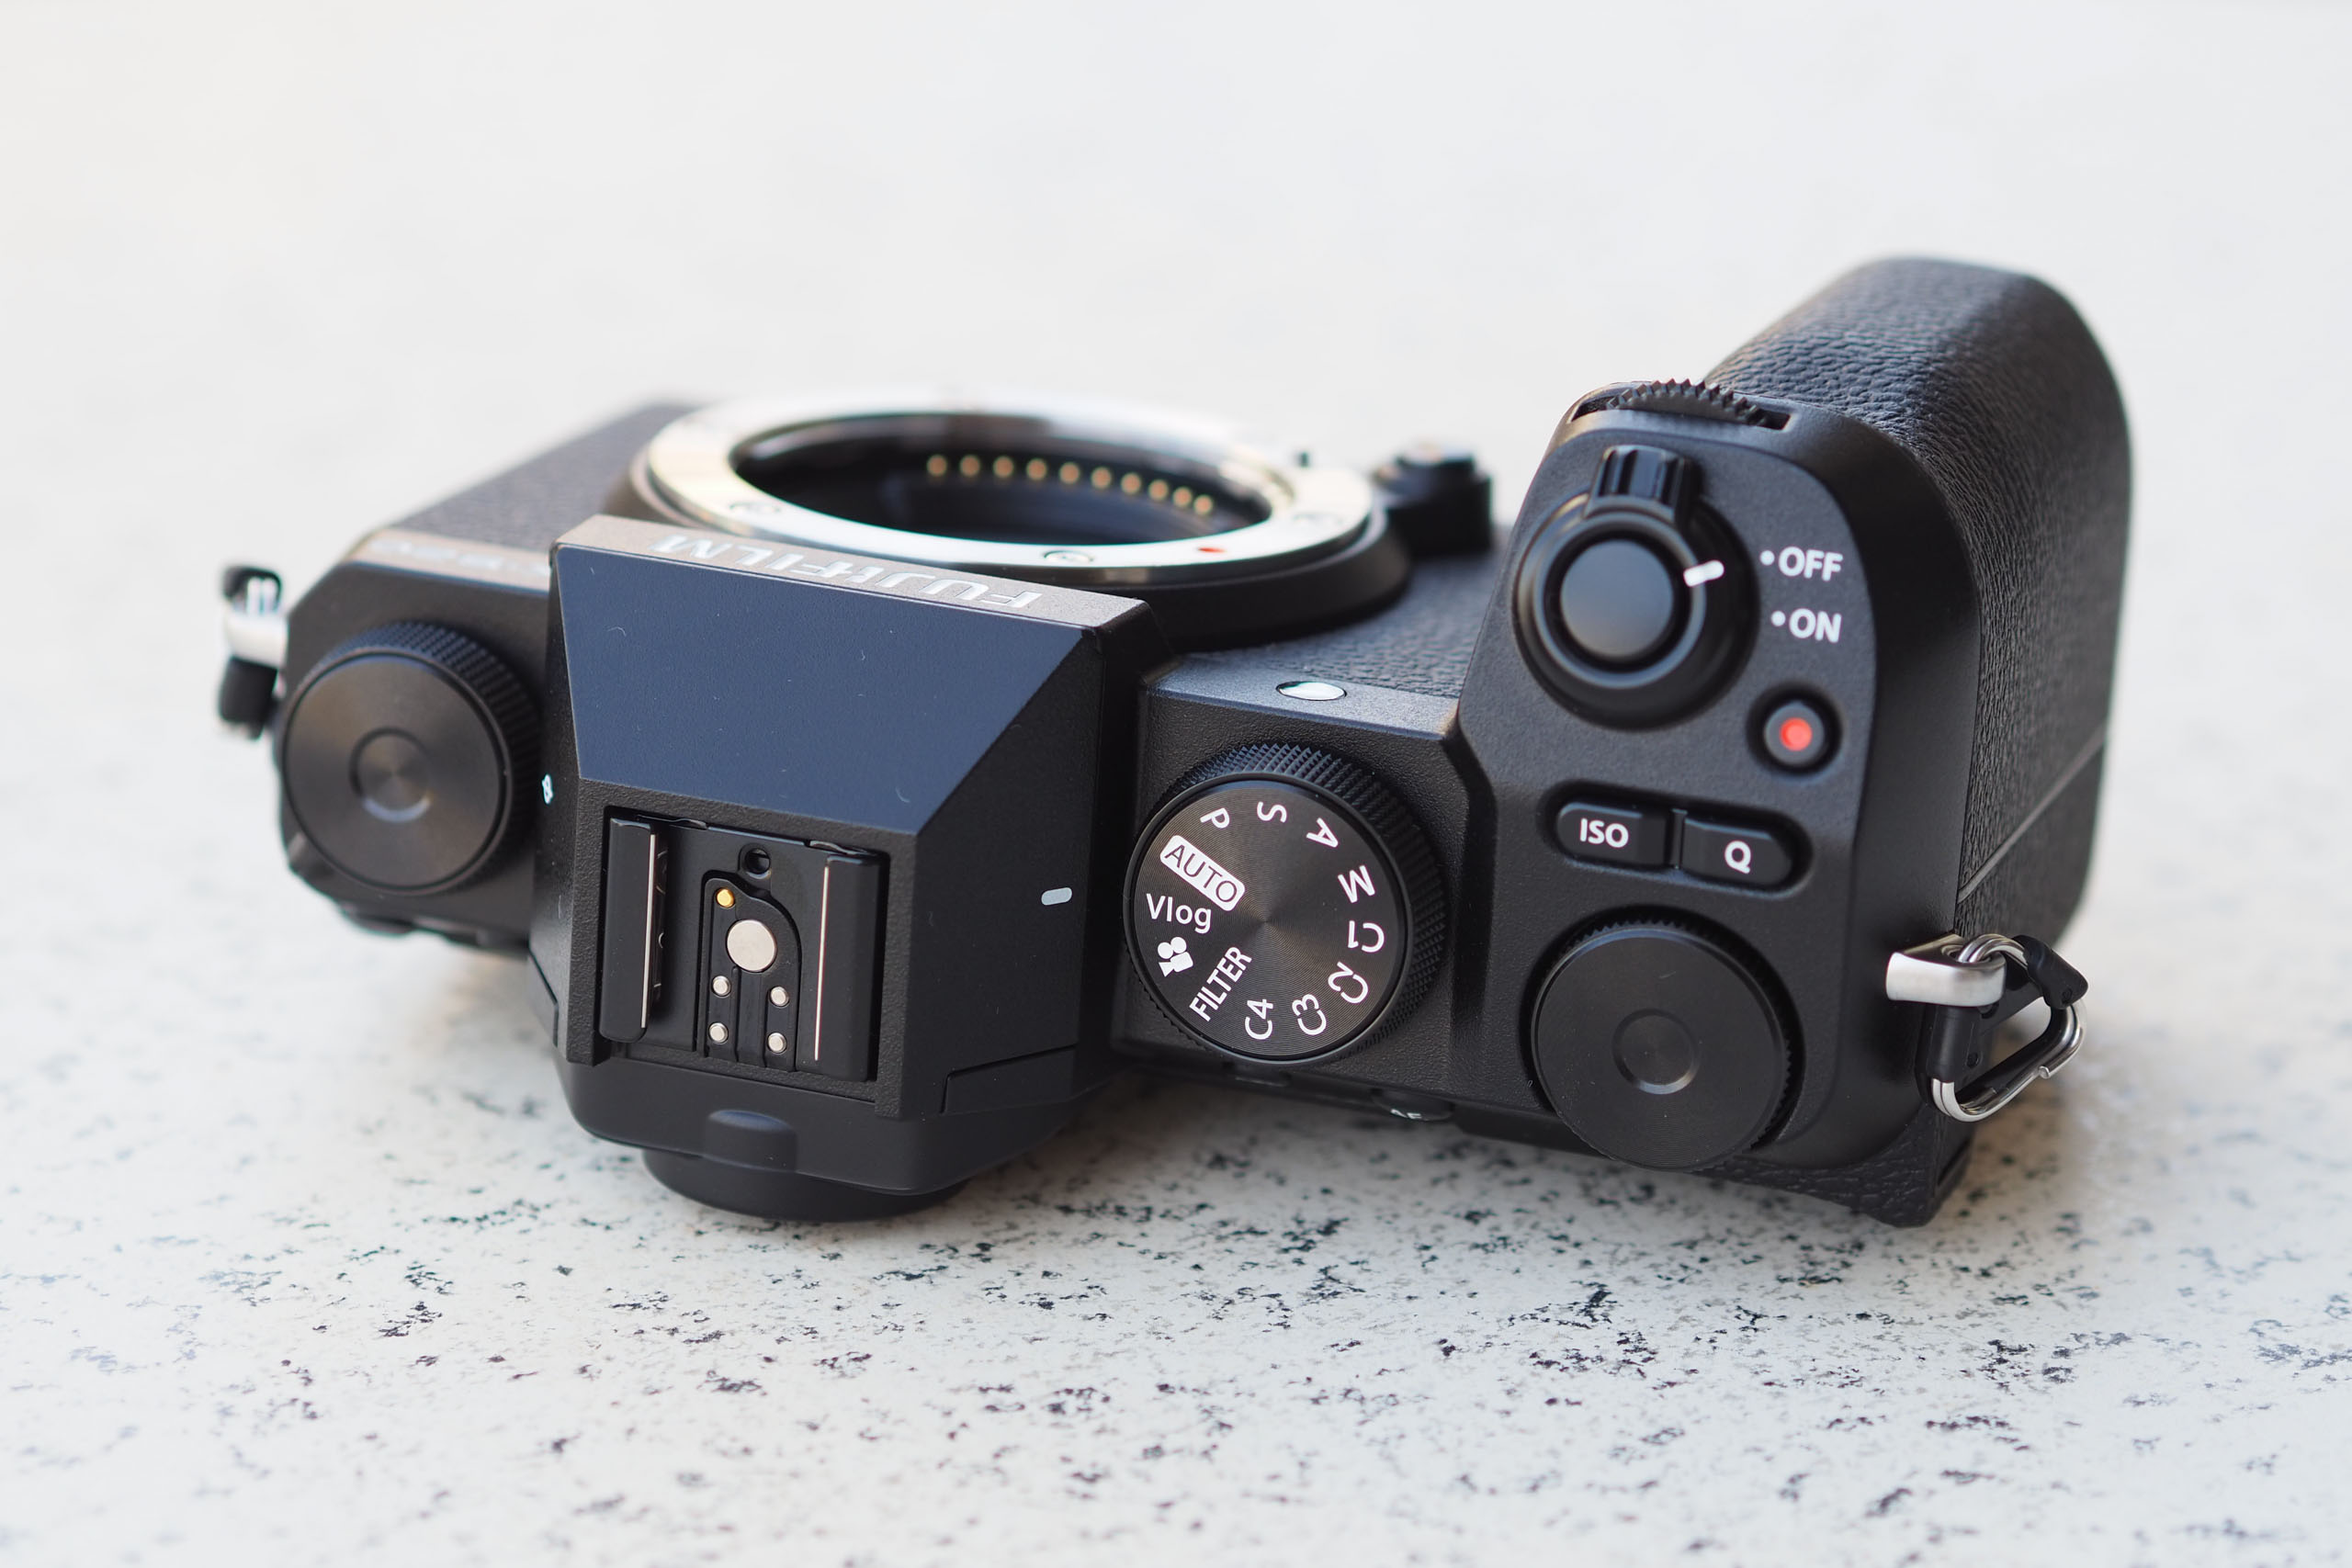 Fujifilm X-S20 Mirrorless Camera Body : Electronics 